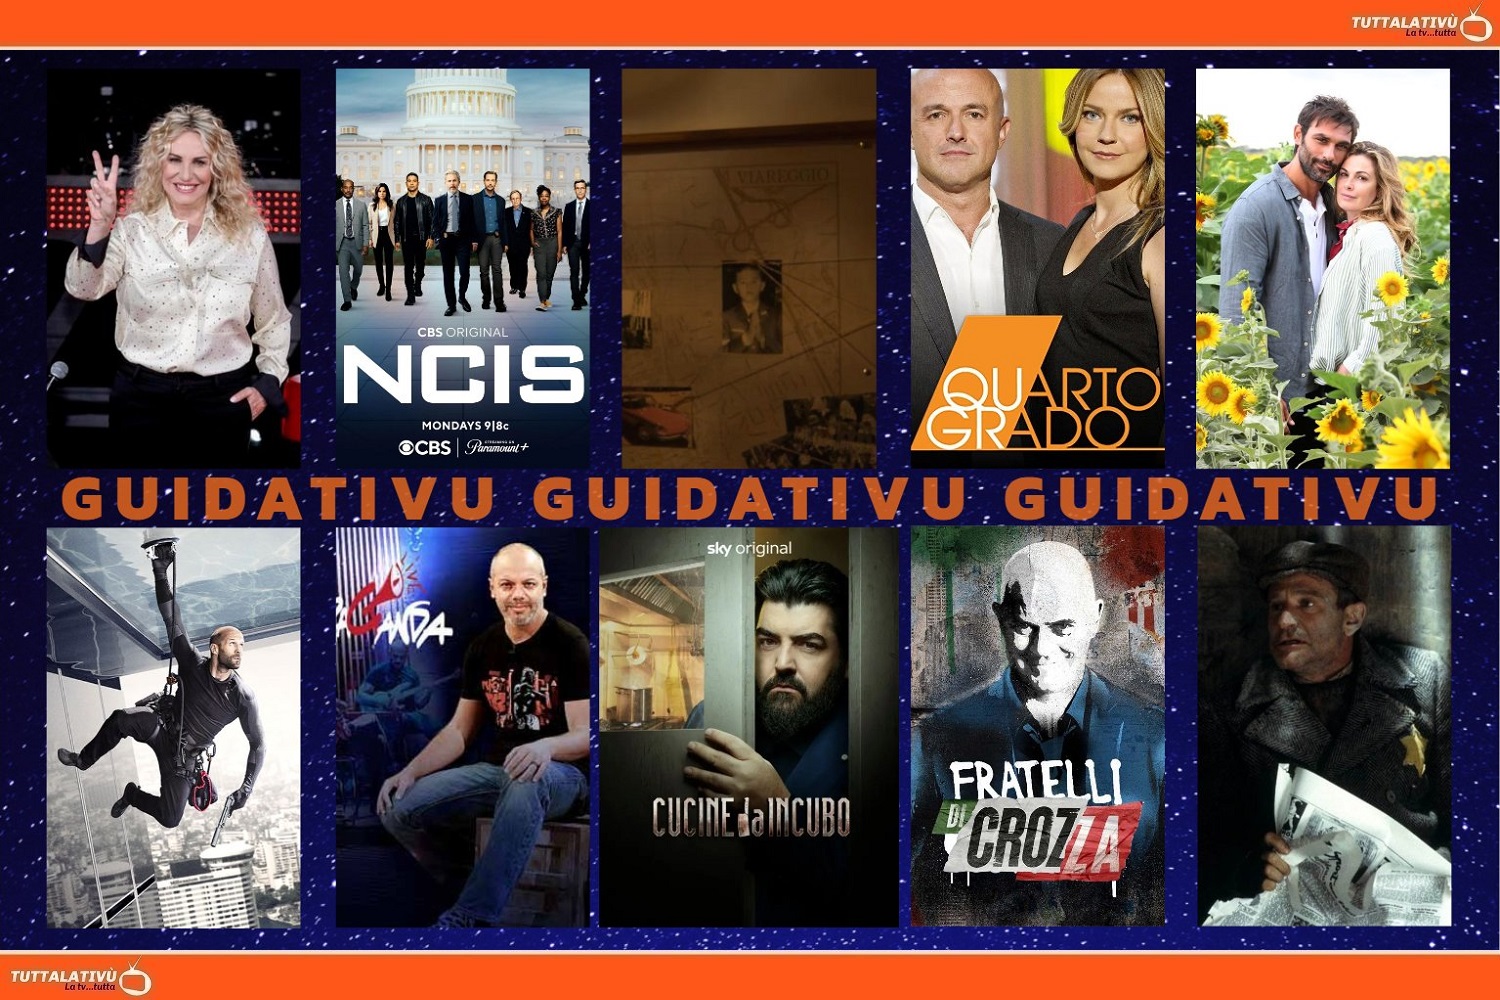 GuidaTV 20 Gennaio 2023: The Voice Senior, Fosca Innocenti, Quarto Grado, Propaganda Live, NCIS, Cucine da incubo, Crozza, Jakob il bugiardo